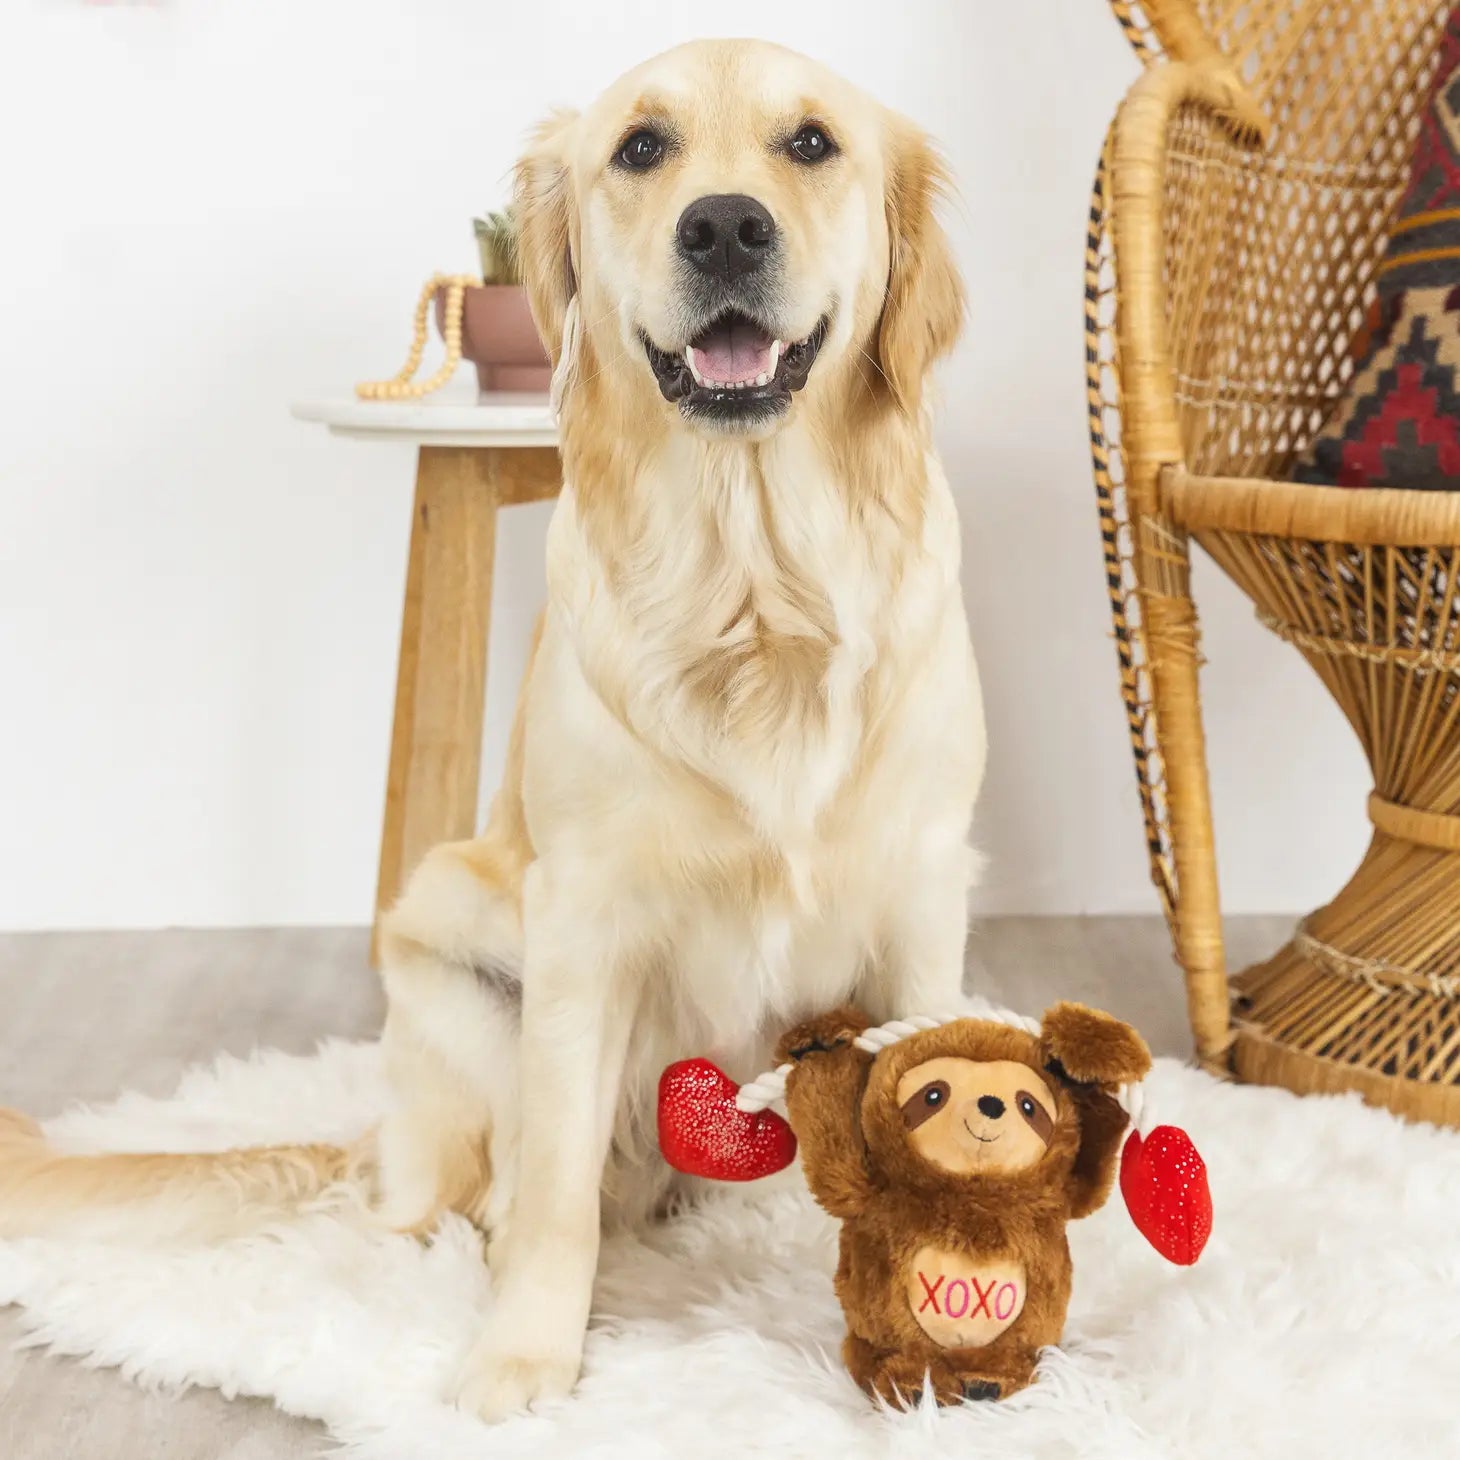 Fringe - Beclaws I Love You Dog Toy